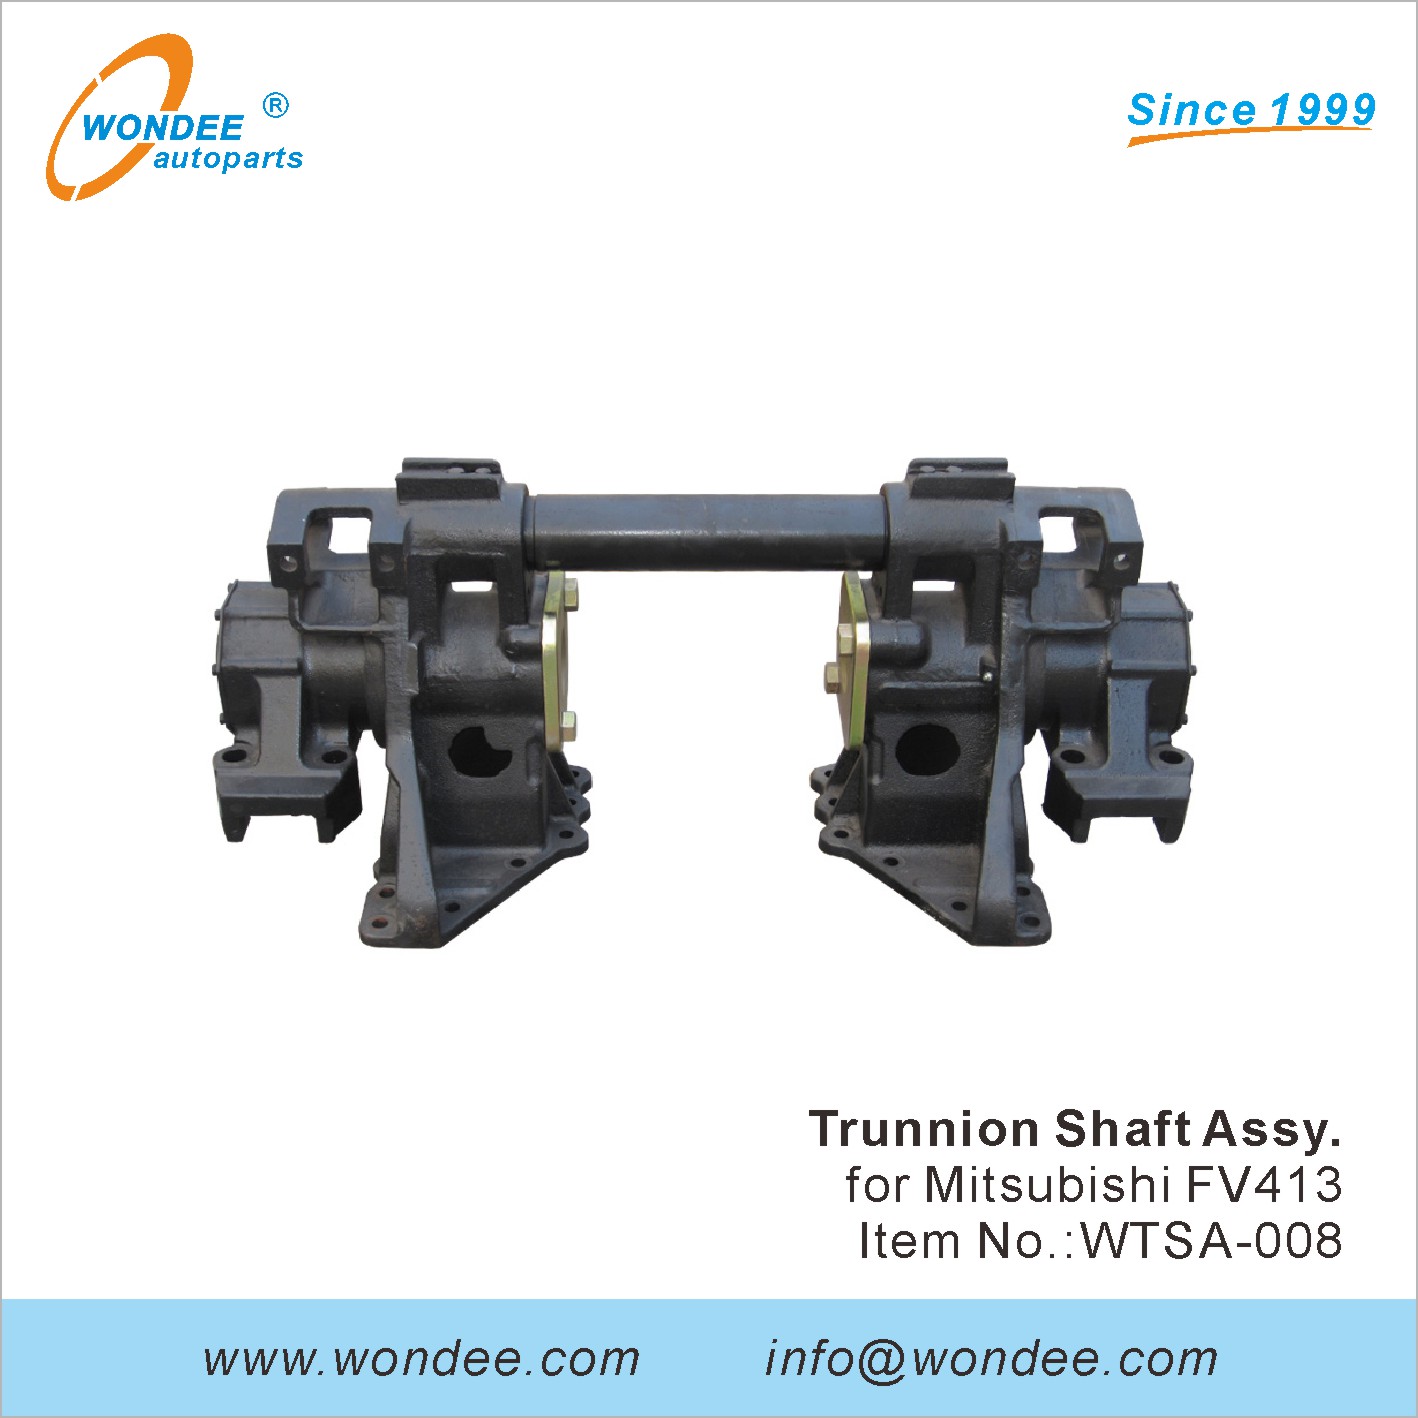 WONDEE trunnion shaft assembly (8)